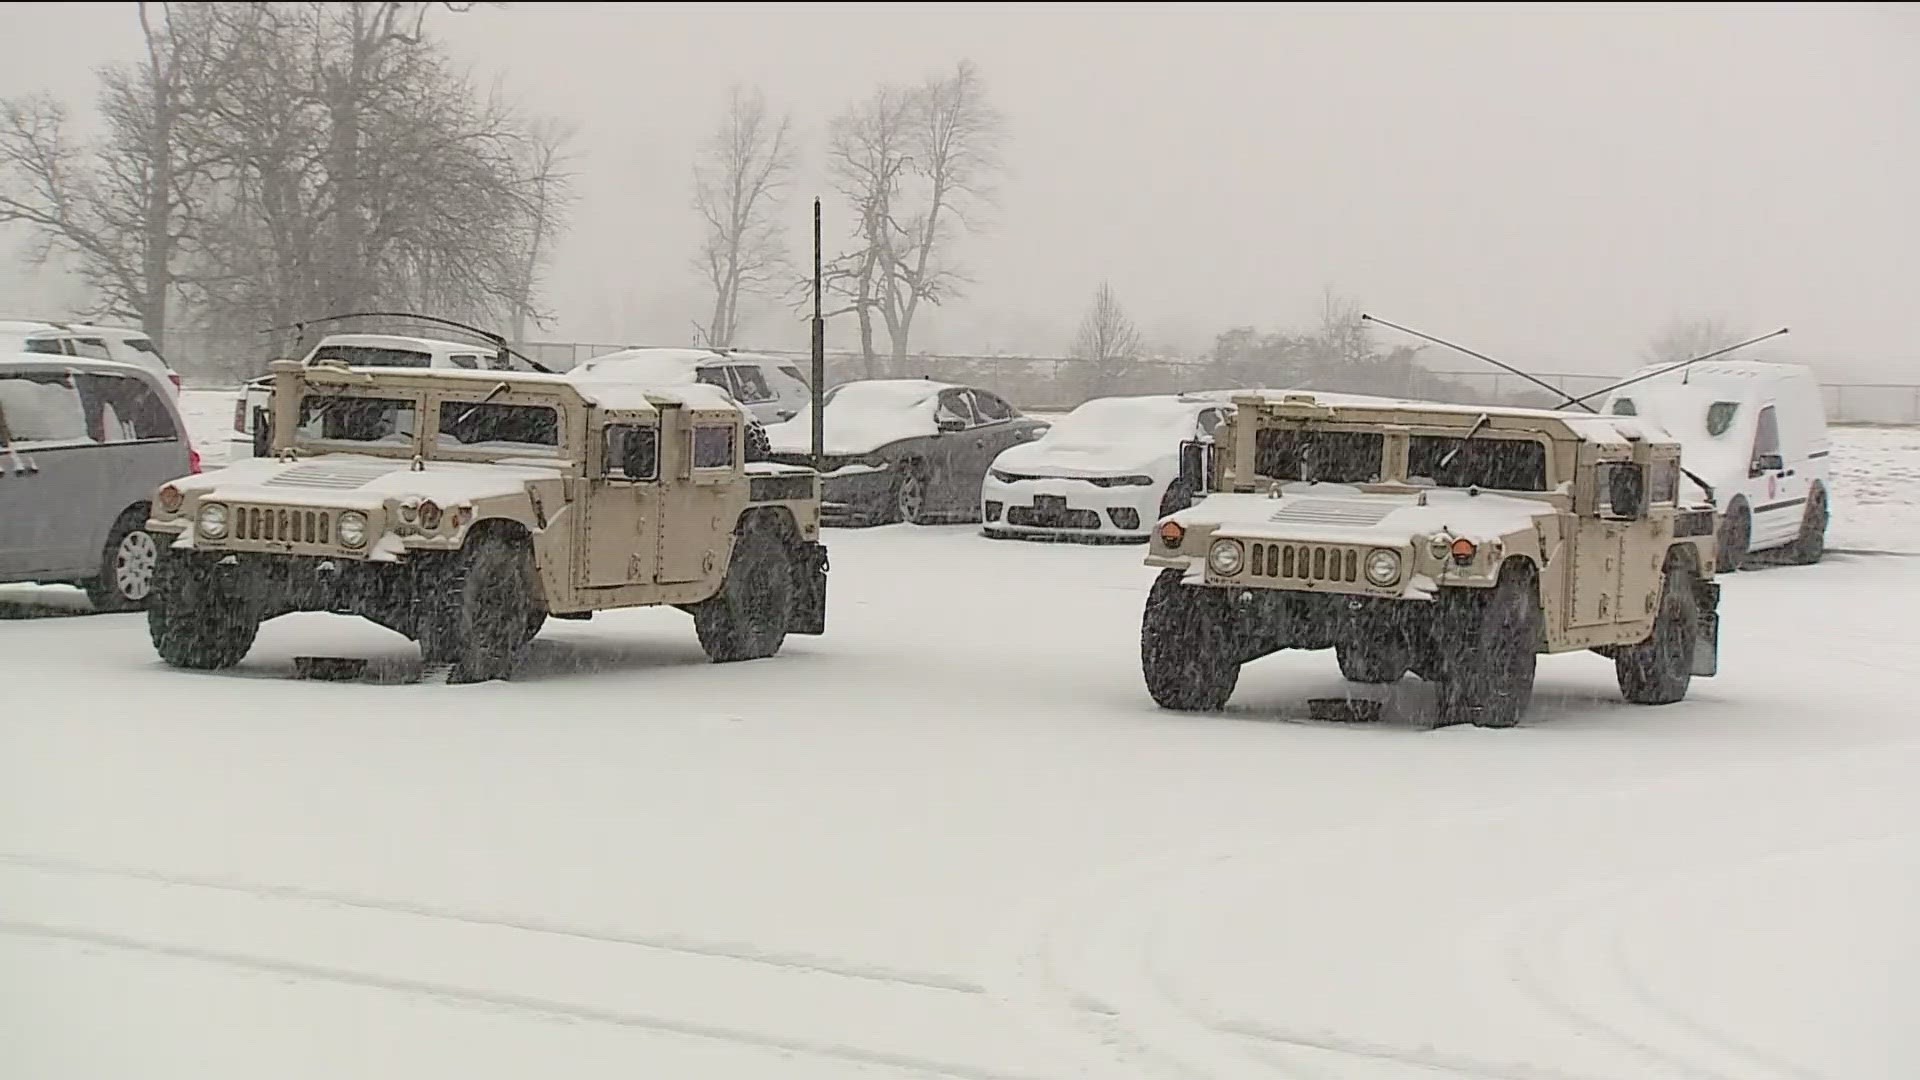 Gov. Sanders' declaration of emergency deployed 168 National Guard members to help with winter operations across Arkansas.